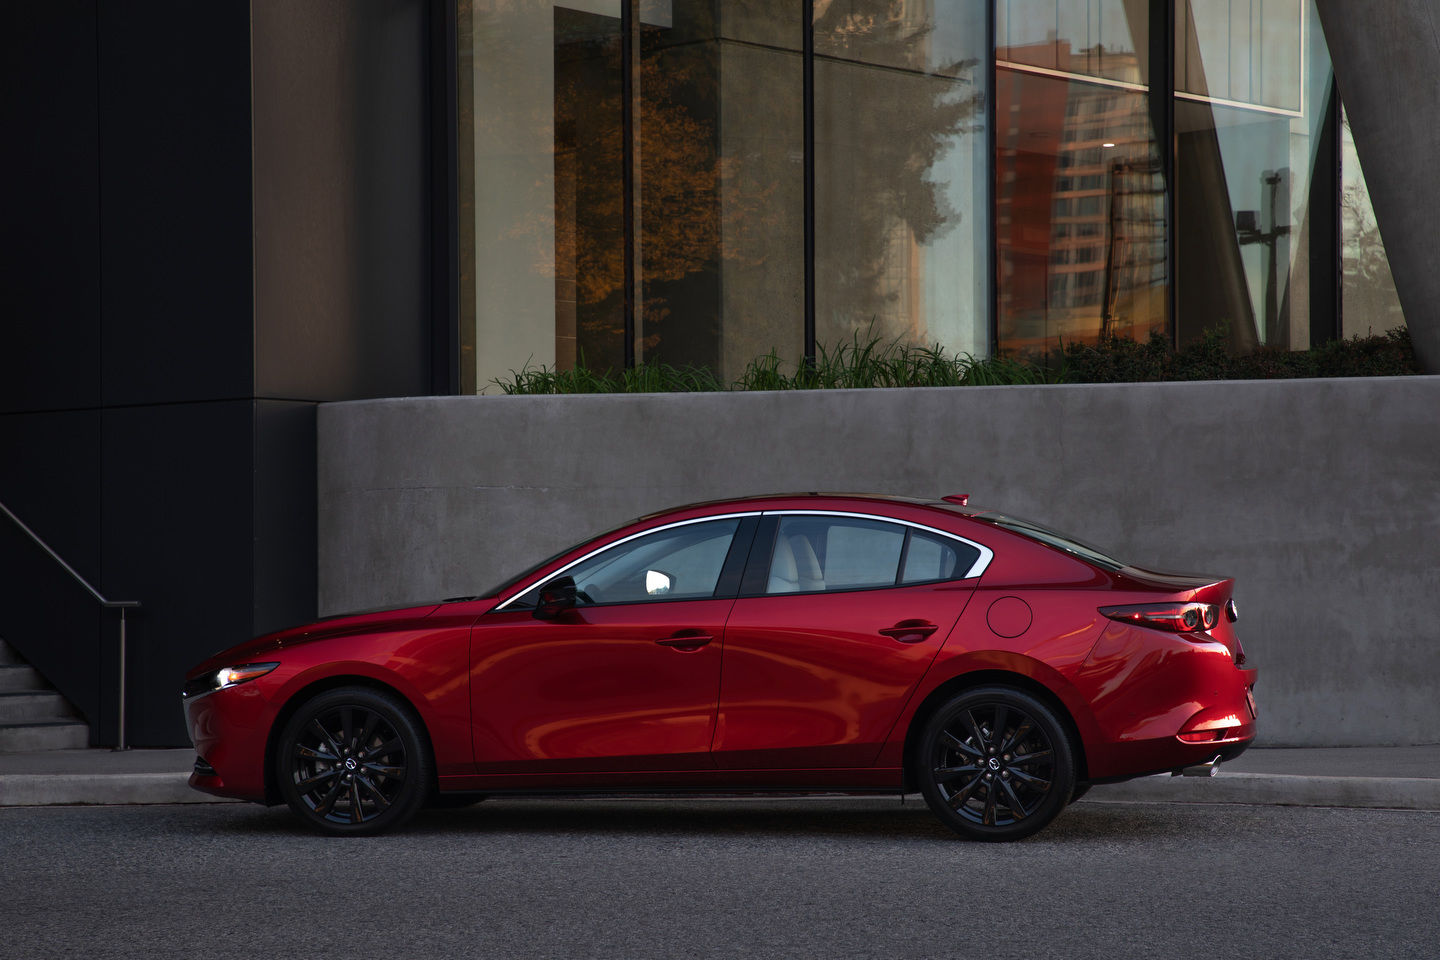 Should You Buy a 2023 Mazda3 or 2023 Kia Forte?